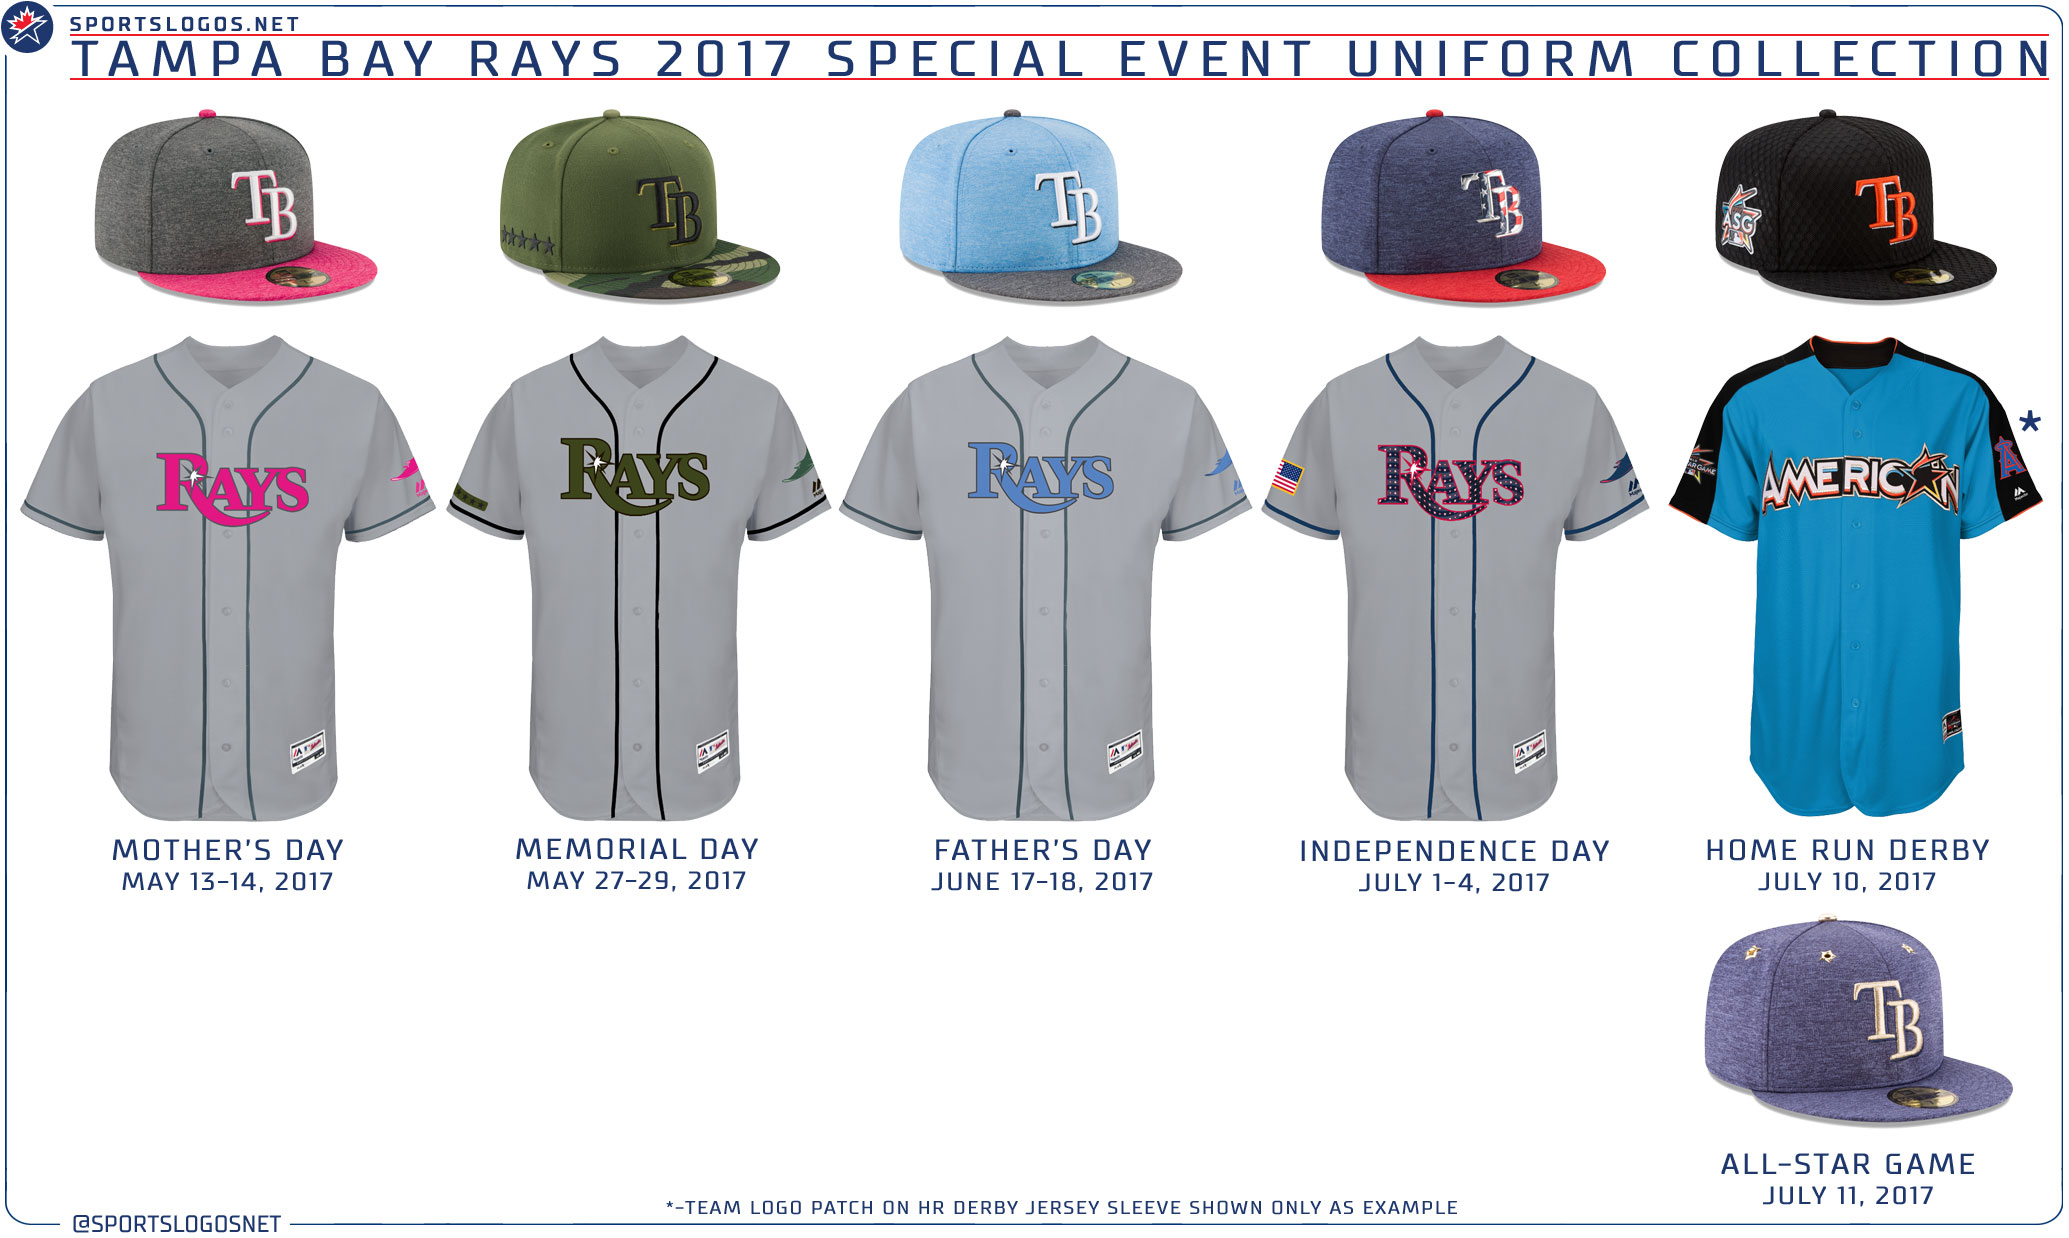 tampa bay rays uniform history